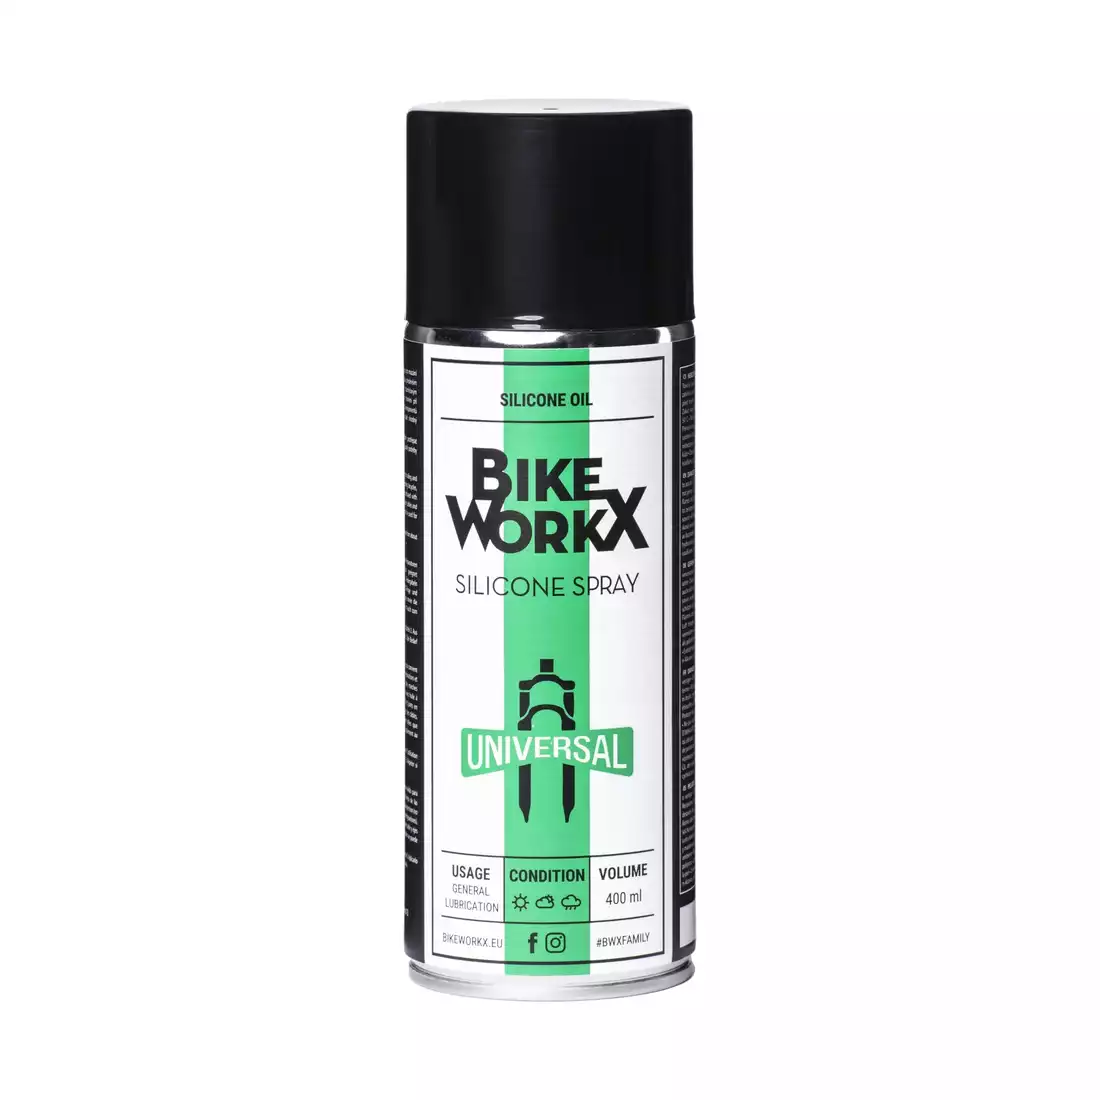 BIKE WORKX SILICONE STAR shock absorber grease in spray 400 ml